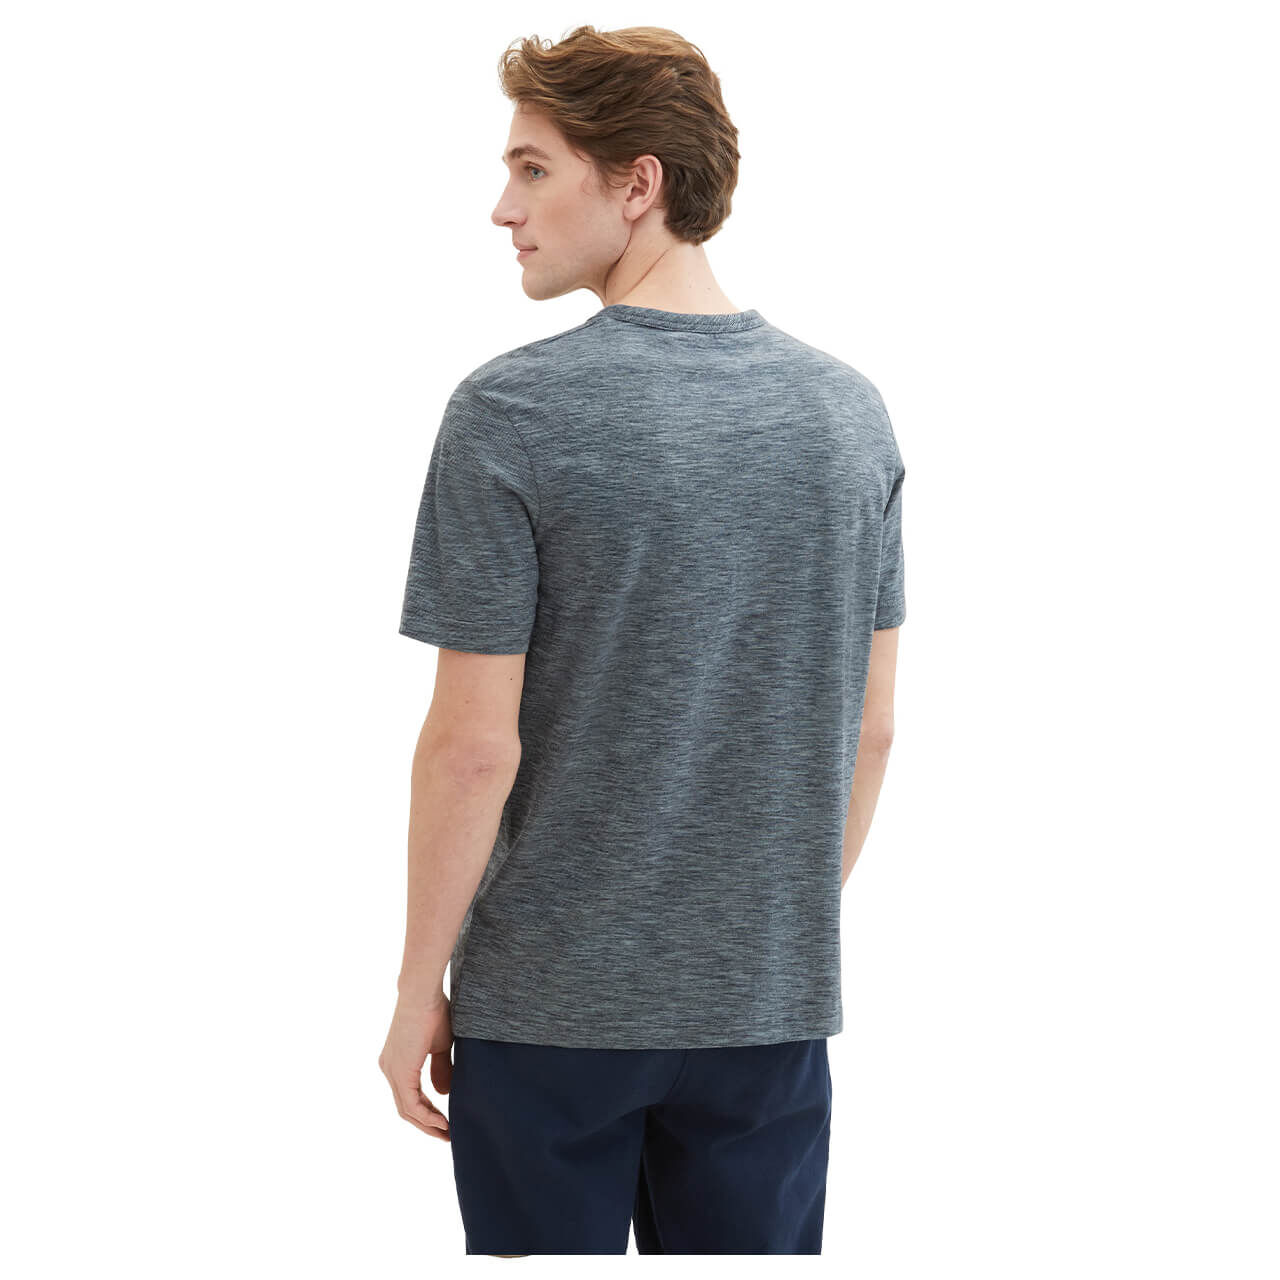 Tom Tailor Herren T-Shirt navy grey mint fine stripes